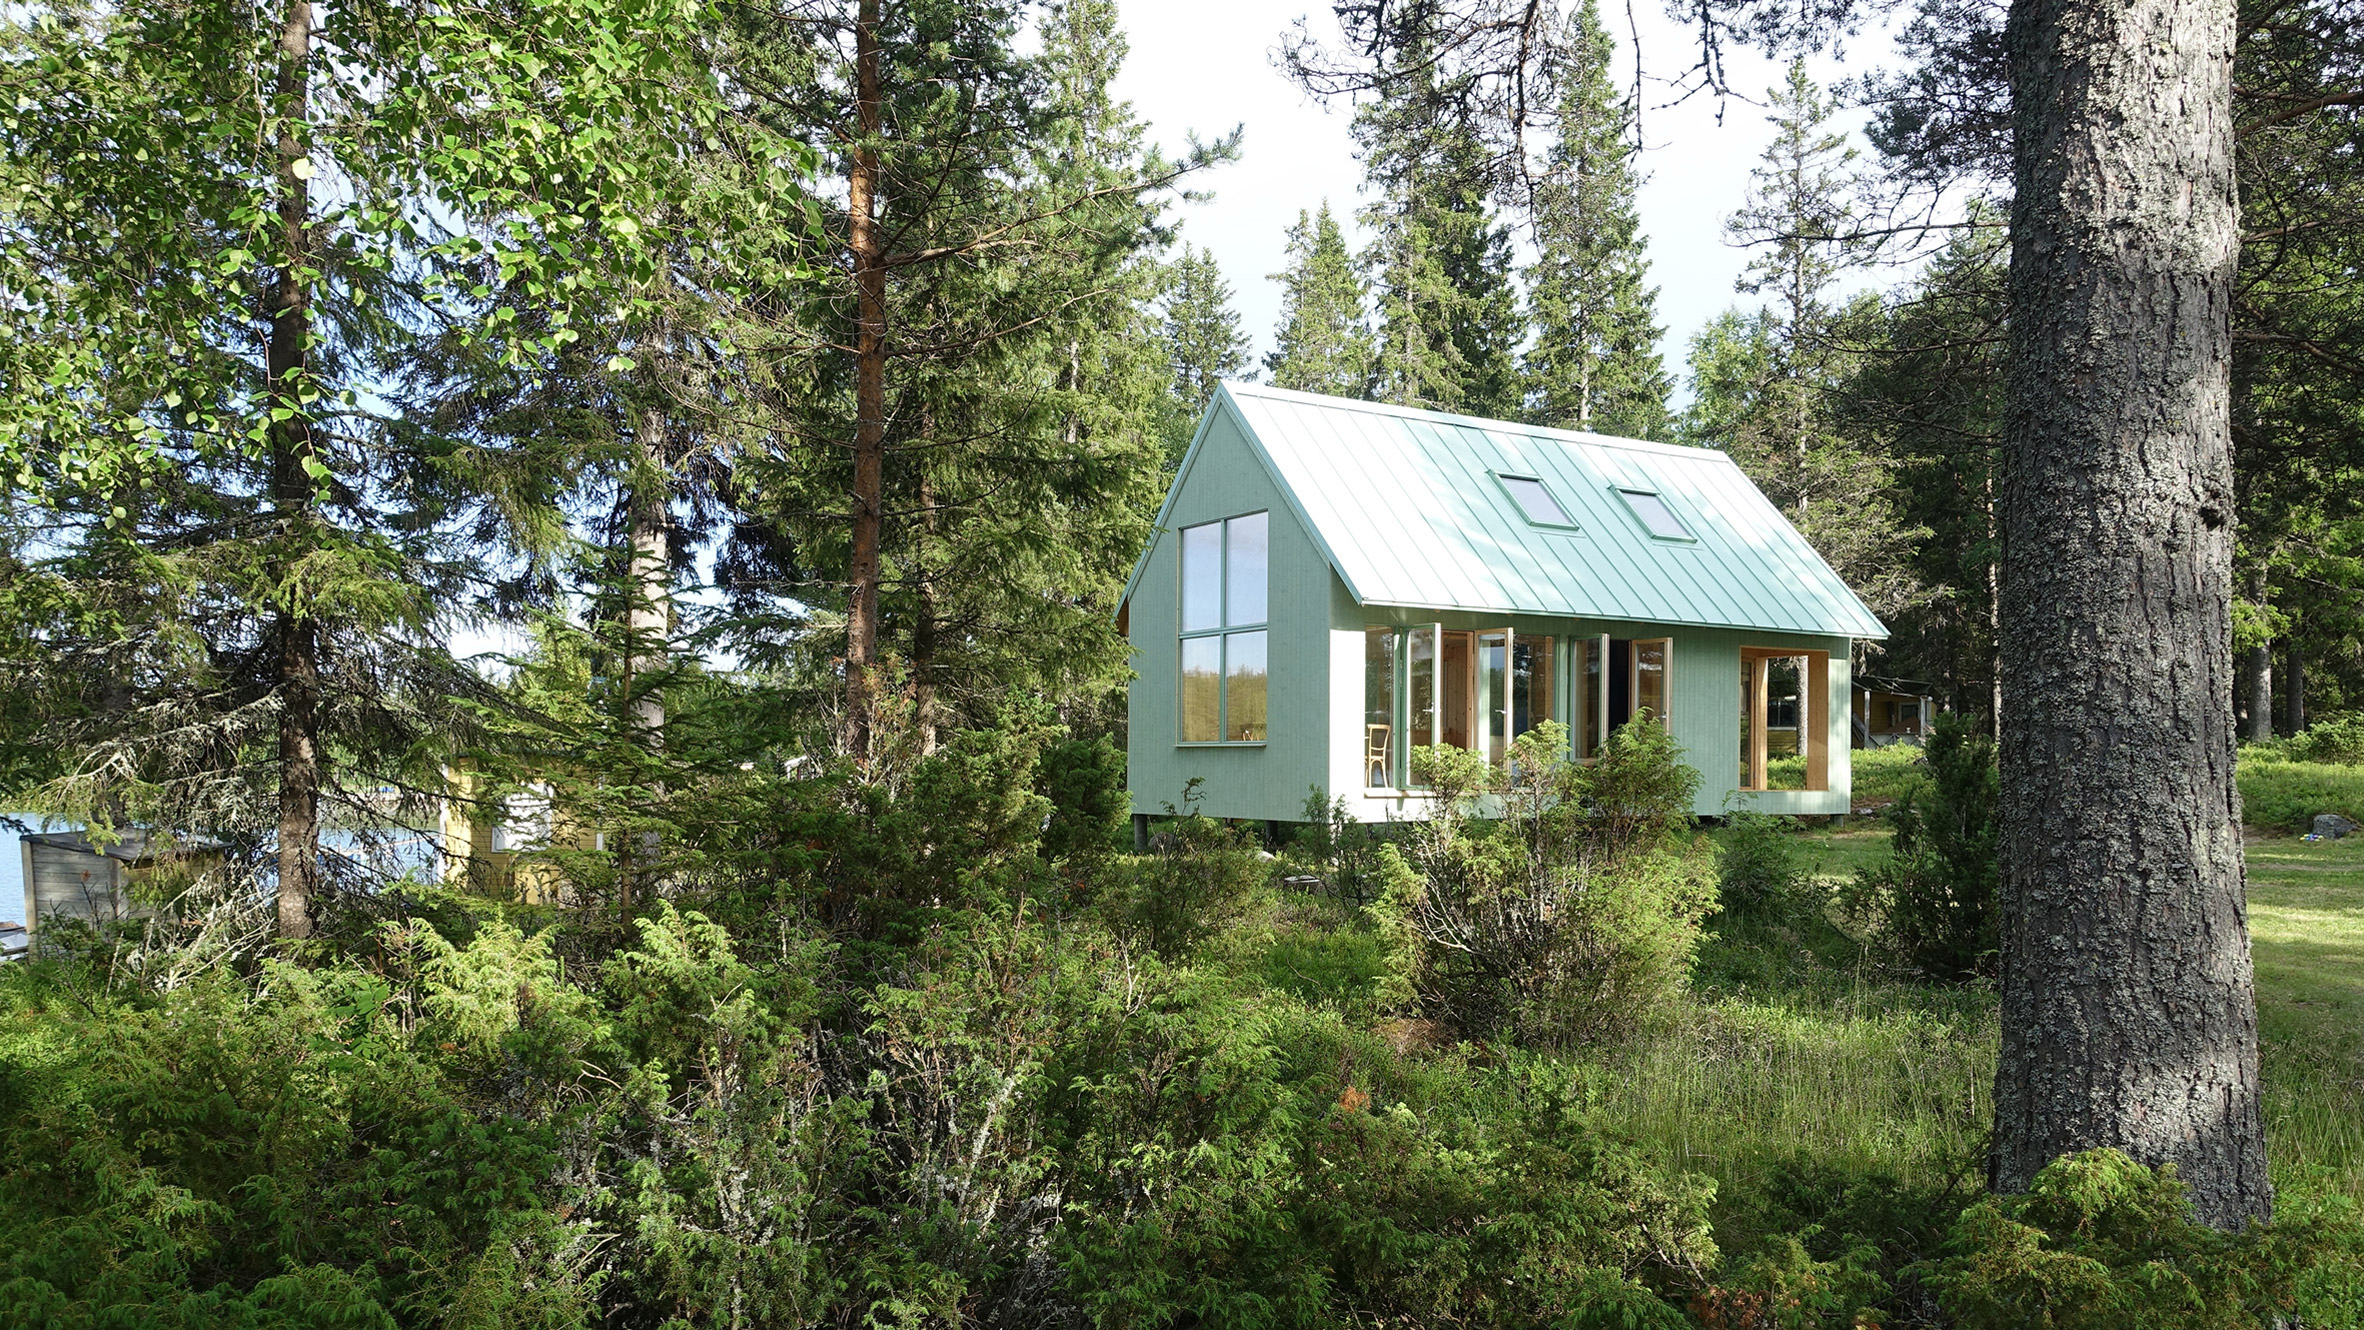 Bornstein Lyckefors builds pale green cabin on rural Swedish island